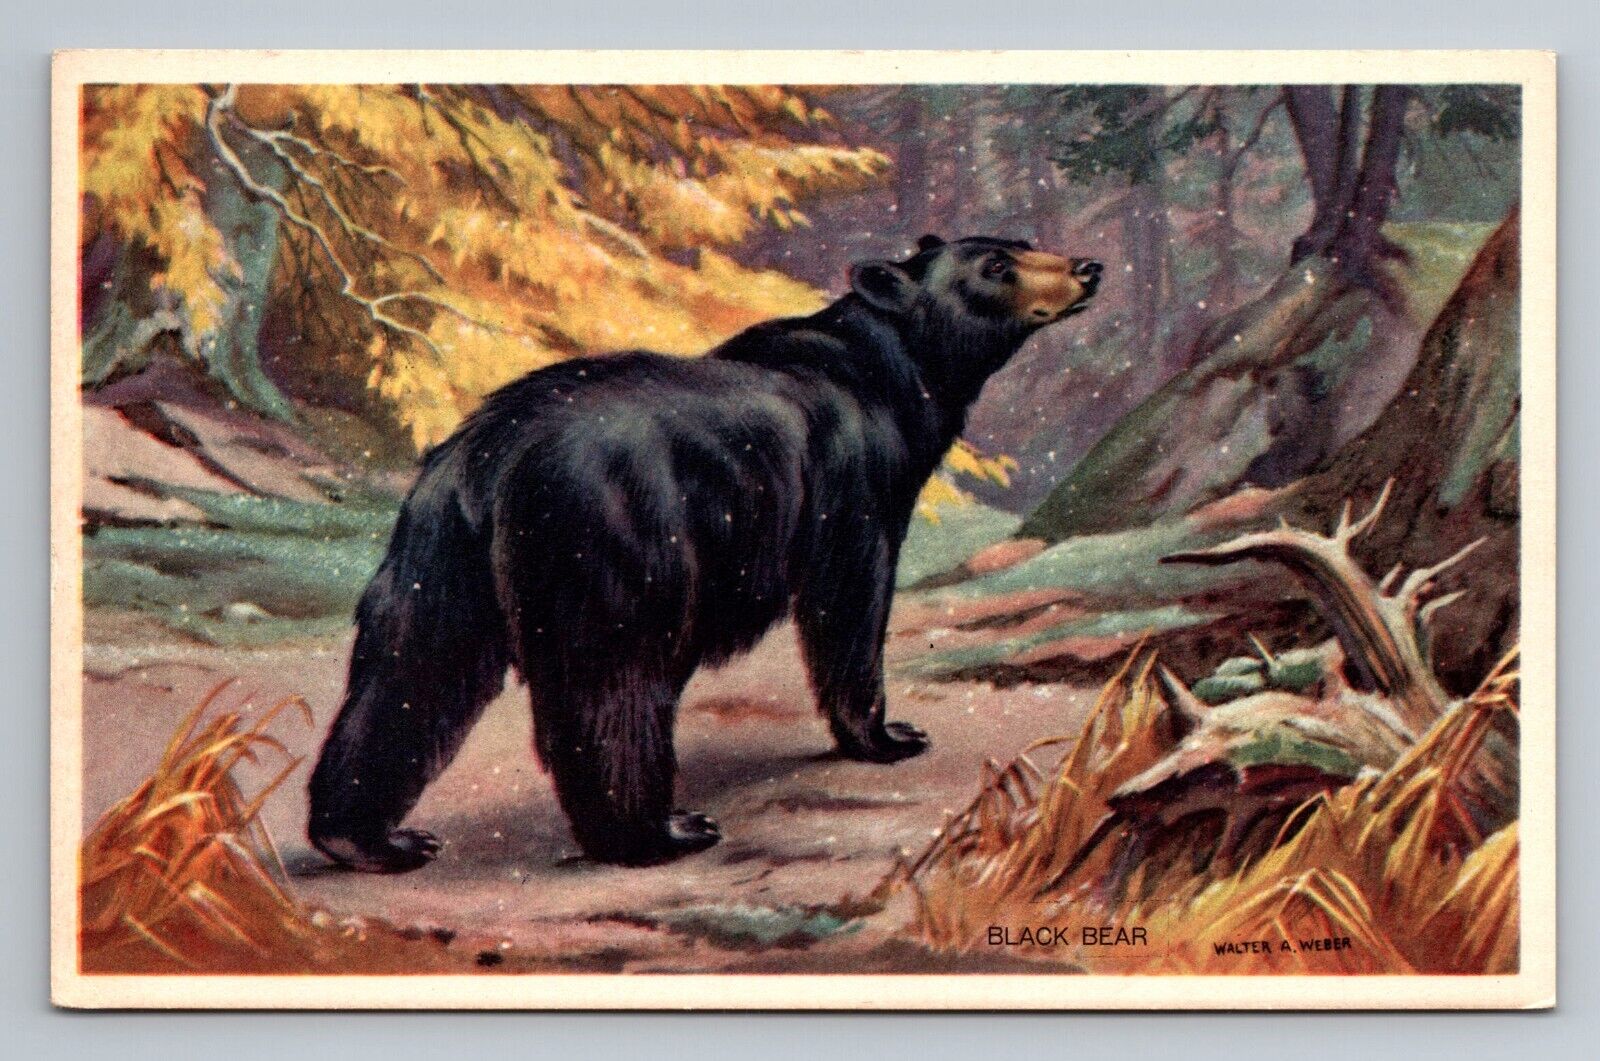 Postcard - Black Bear America's Wildlife Resources Walter A. Weber